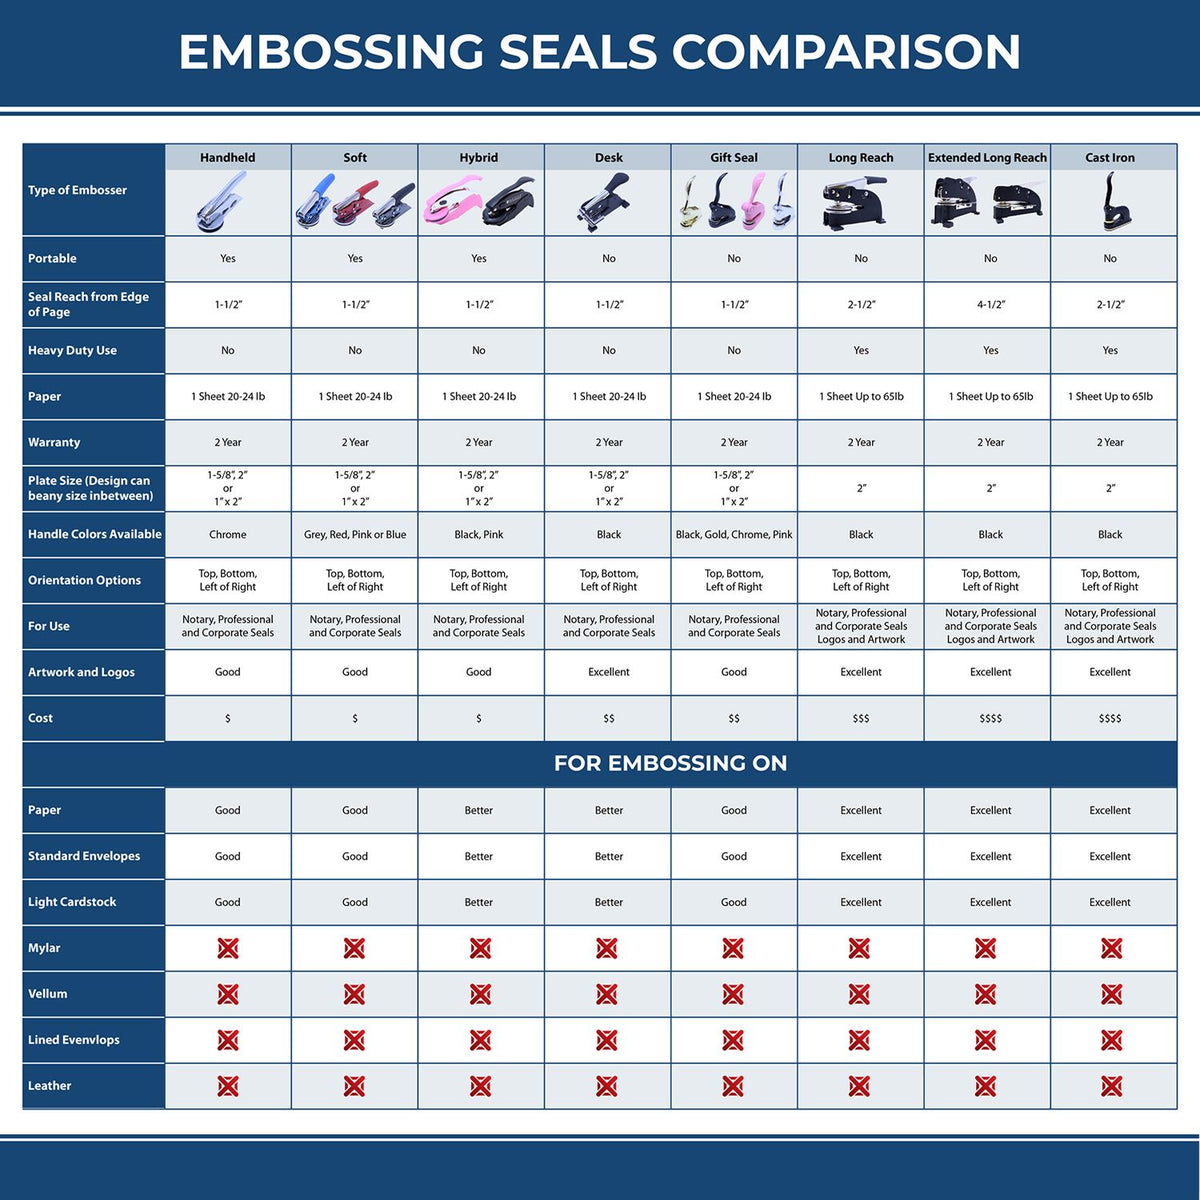 Interior Designer Black Gift Seal Embosser 3024ID Embossing Seal Comparison